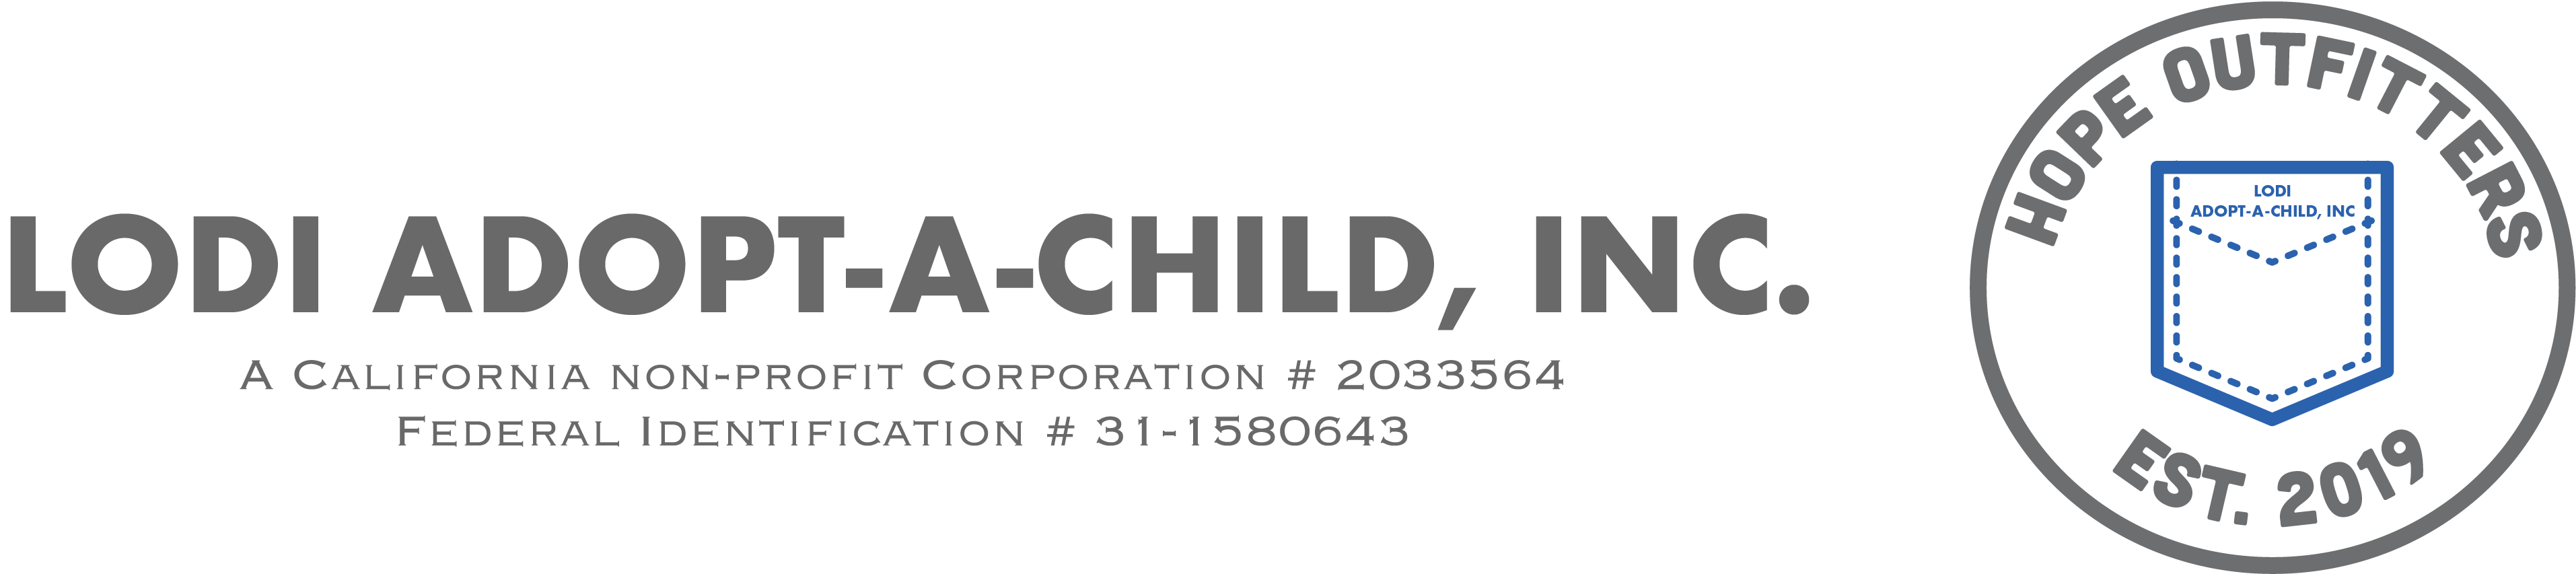 Lodi Adopt-A-Child, Inc logo